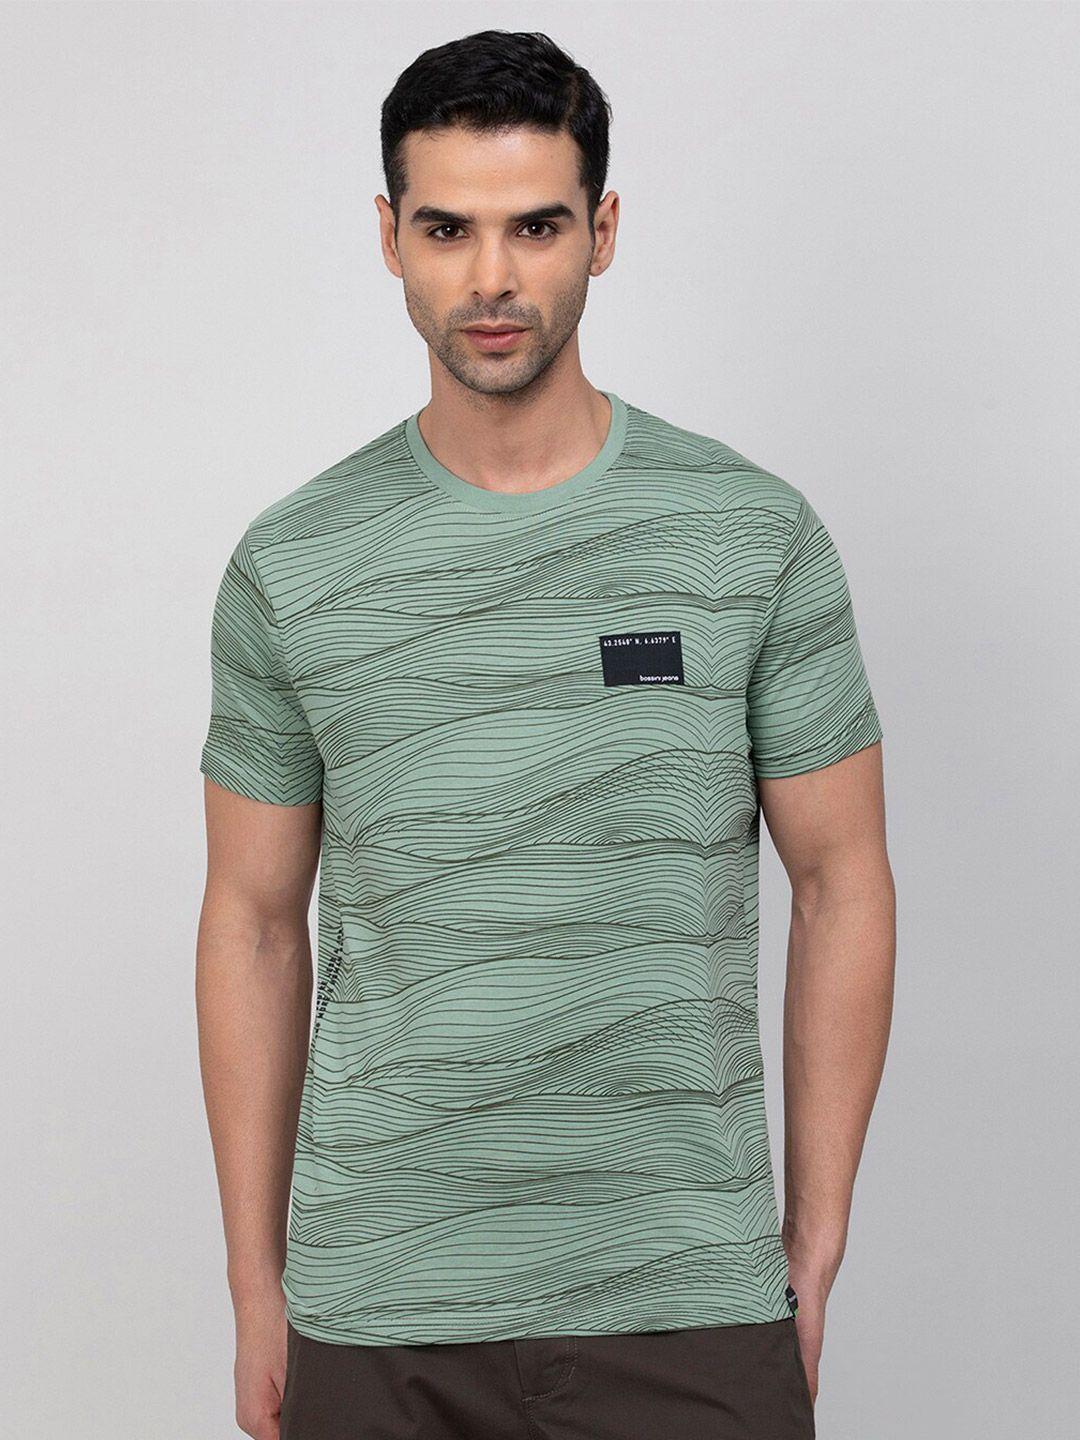 bossini-abstract-printed-cotton-t-shirt